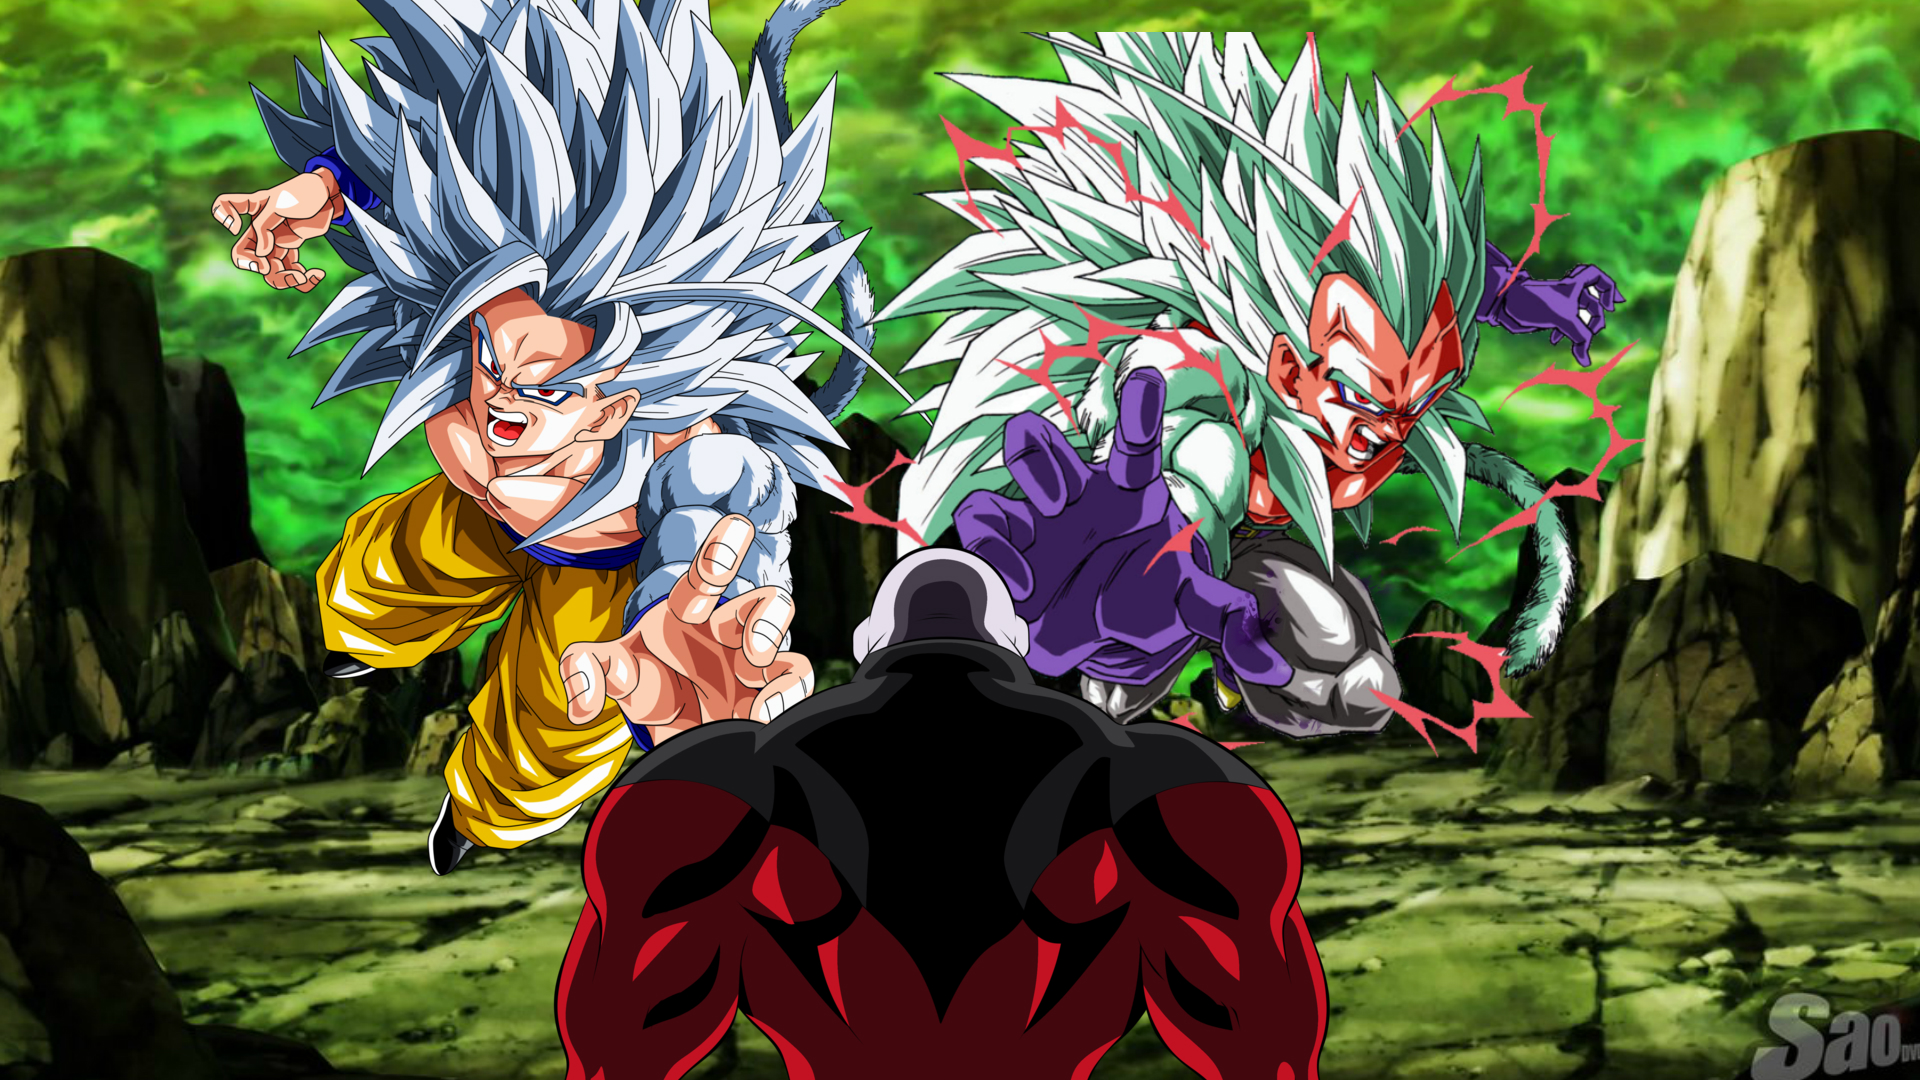 Goku SSJ5 vs Vegeta SSJ5 by Jtyeah on DeviantArt